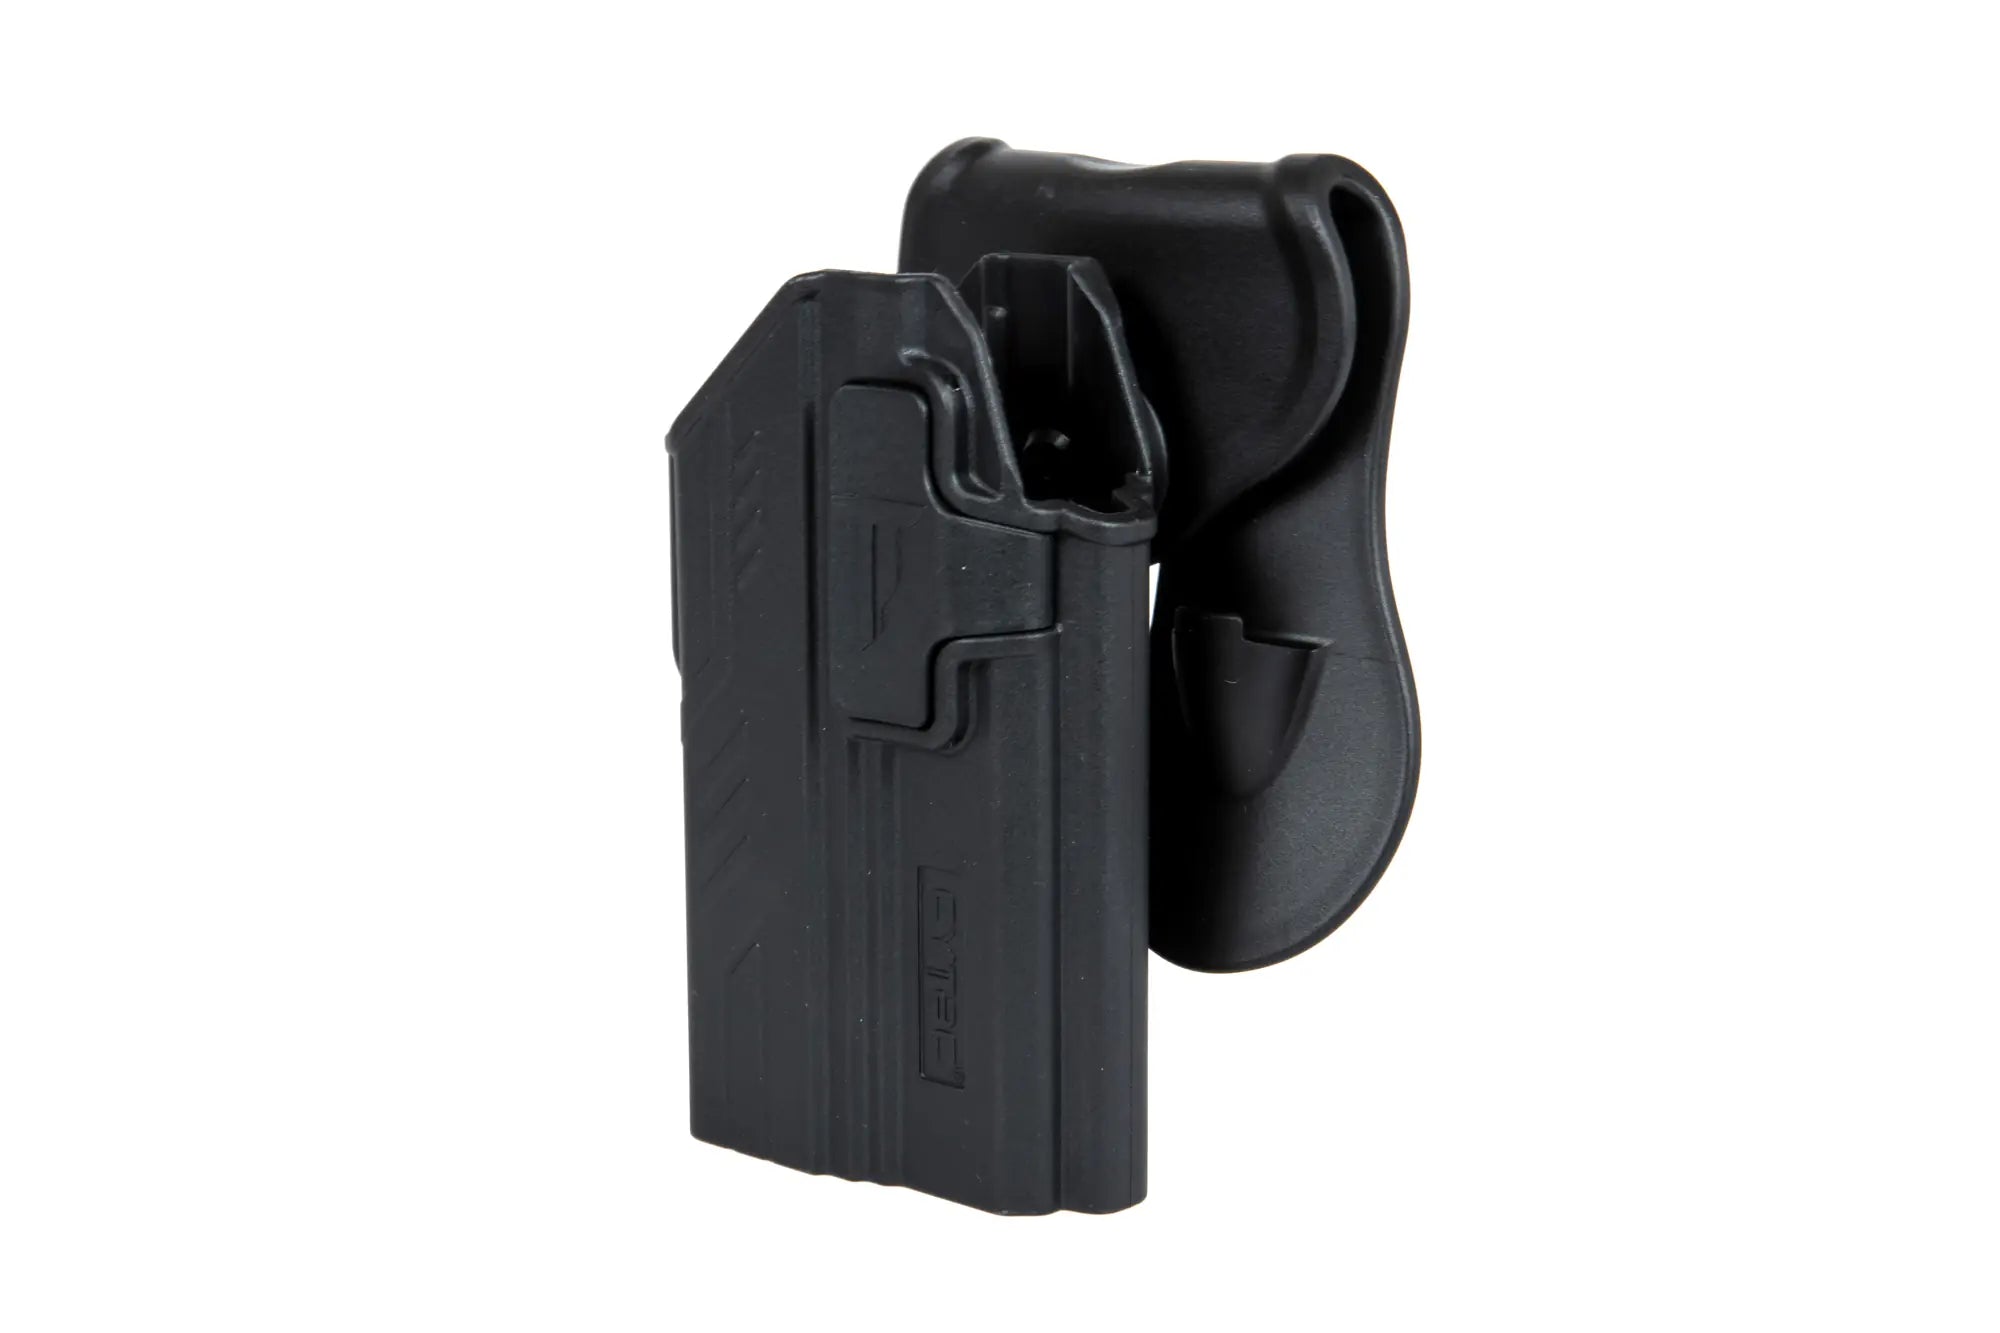 Kabura R-Defender GEN.4 do Glock 17 z latarką - Czarna CY-PL-G17G4